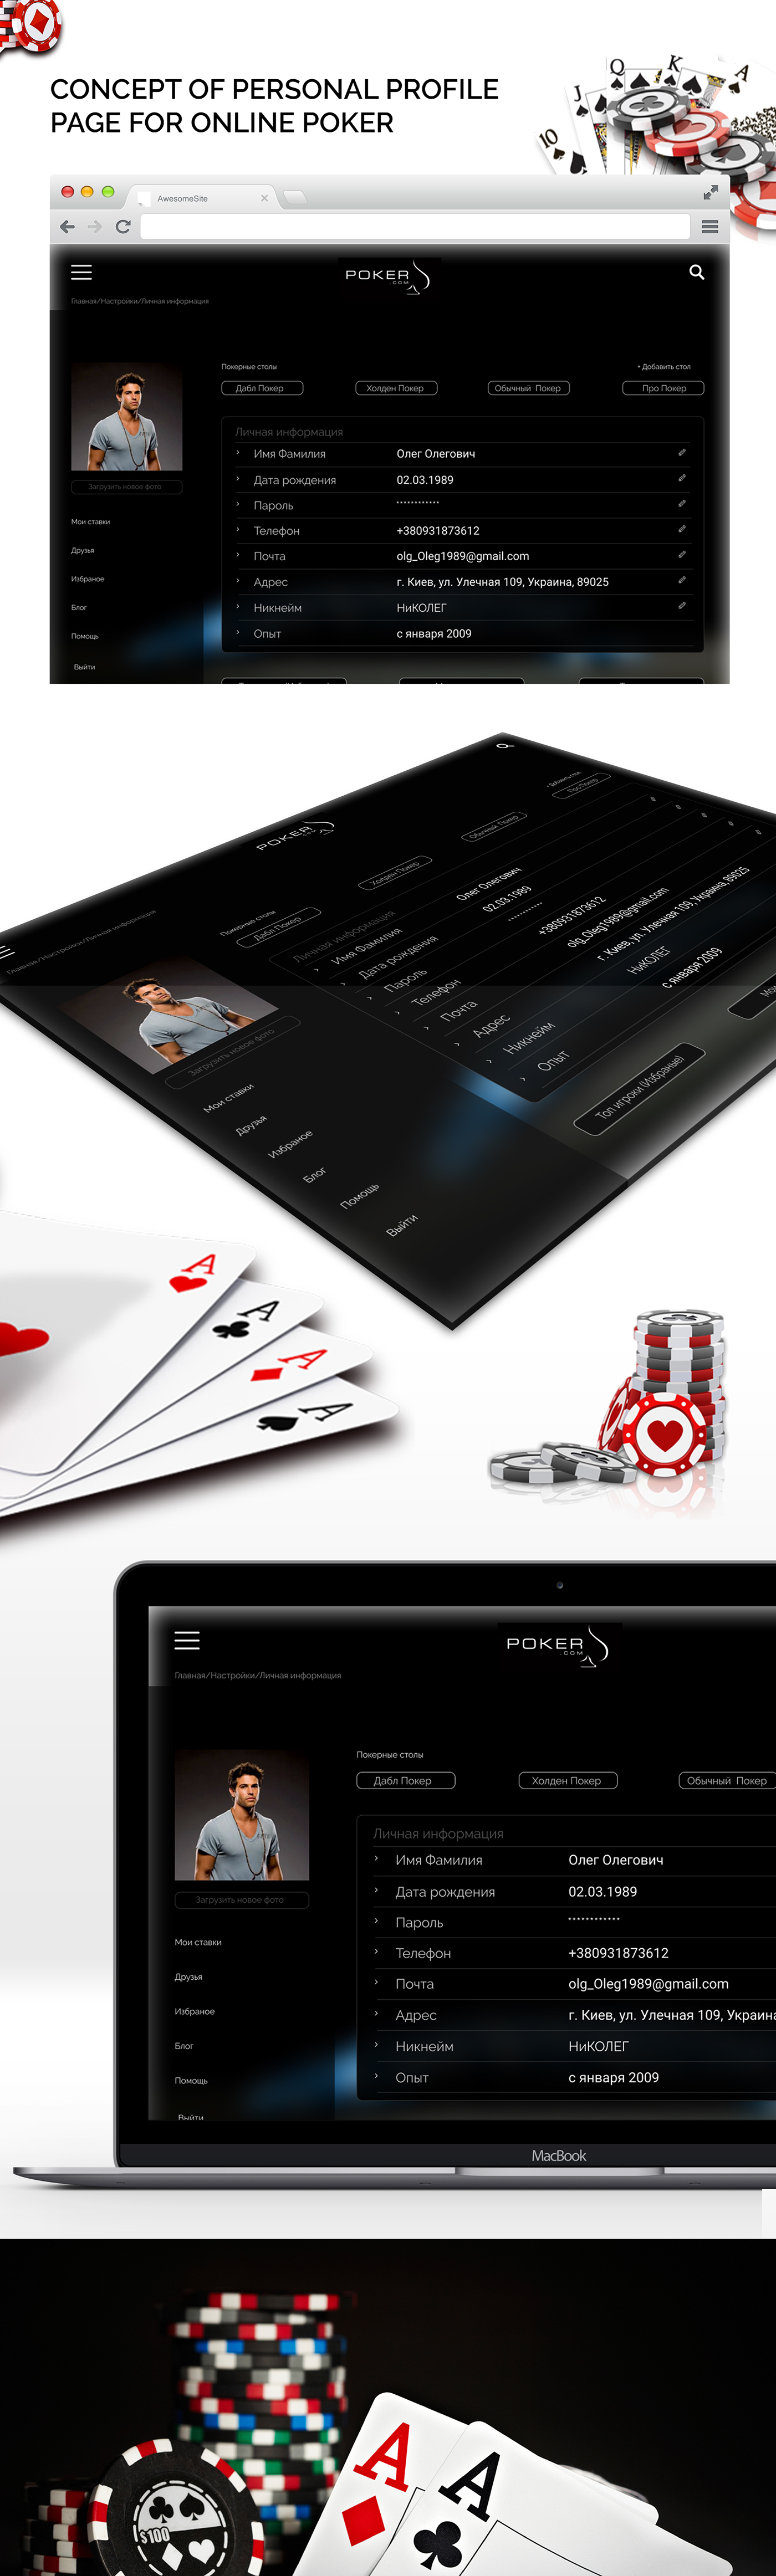 online poker profiles